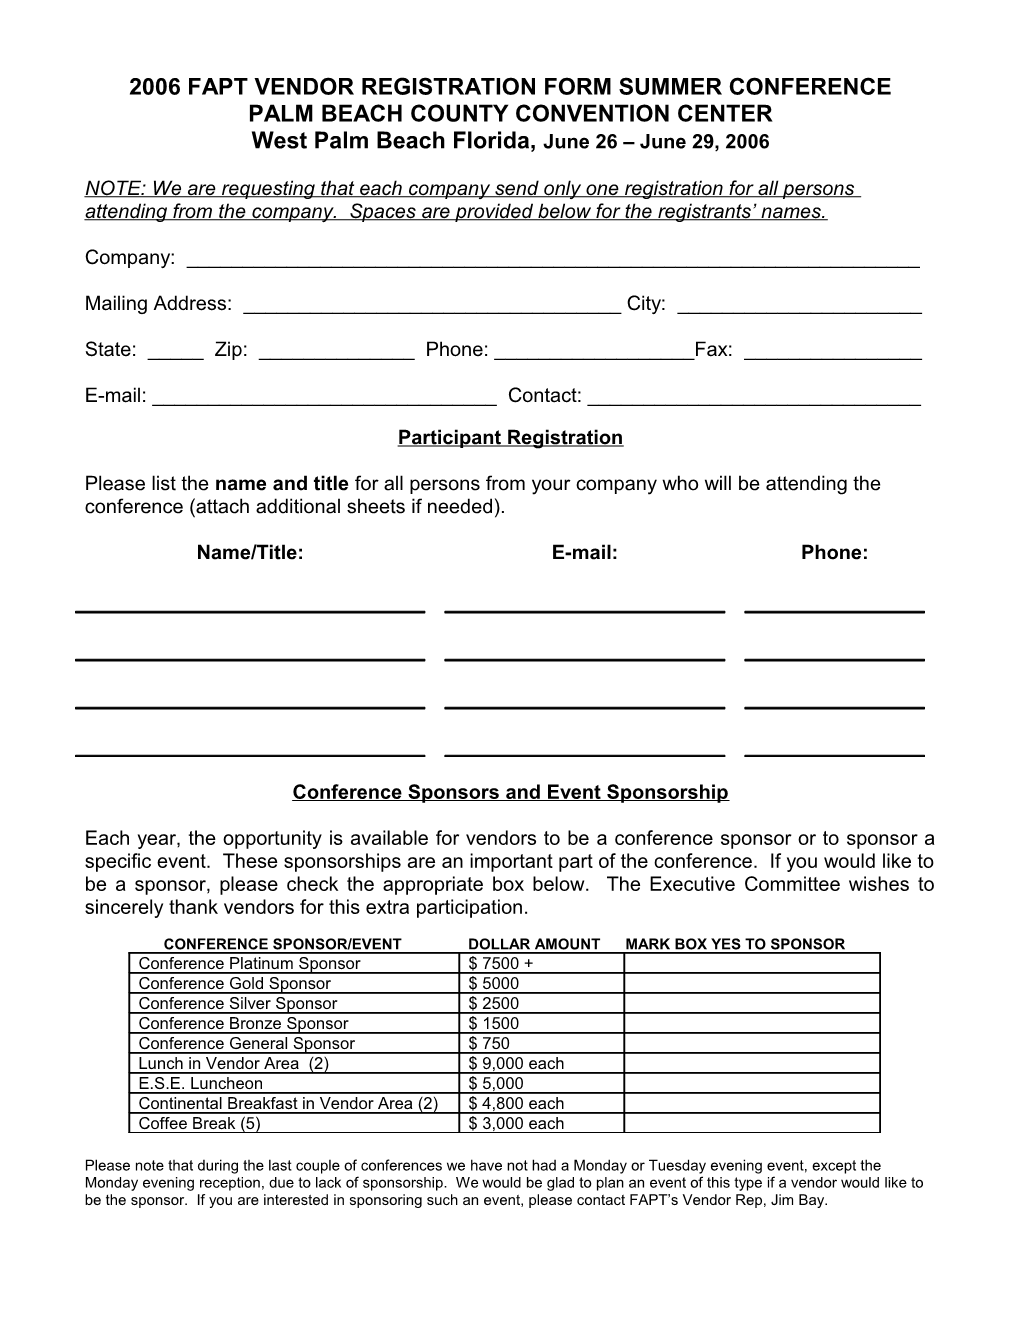 Fapt Vendor Registration Form